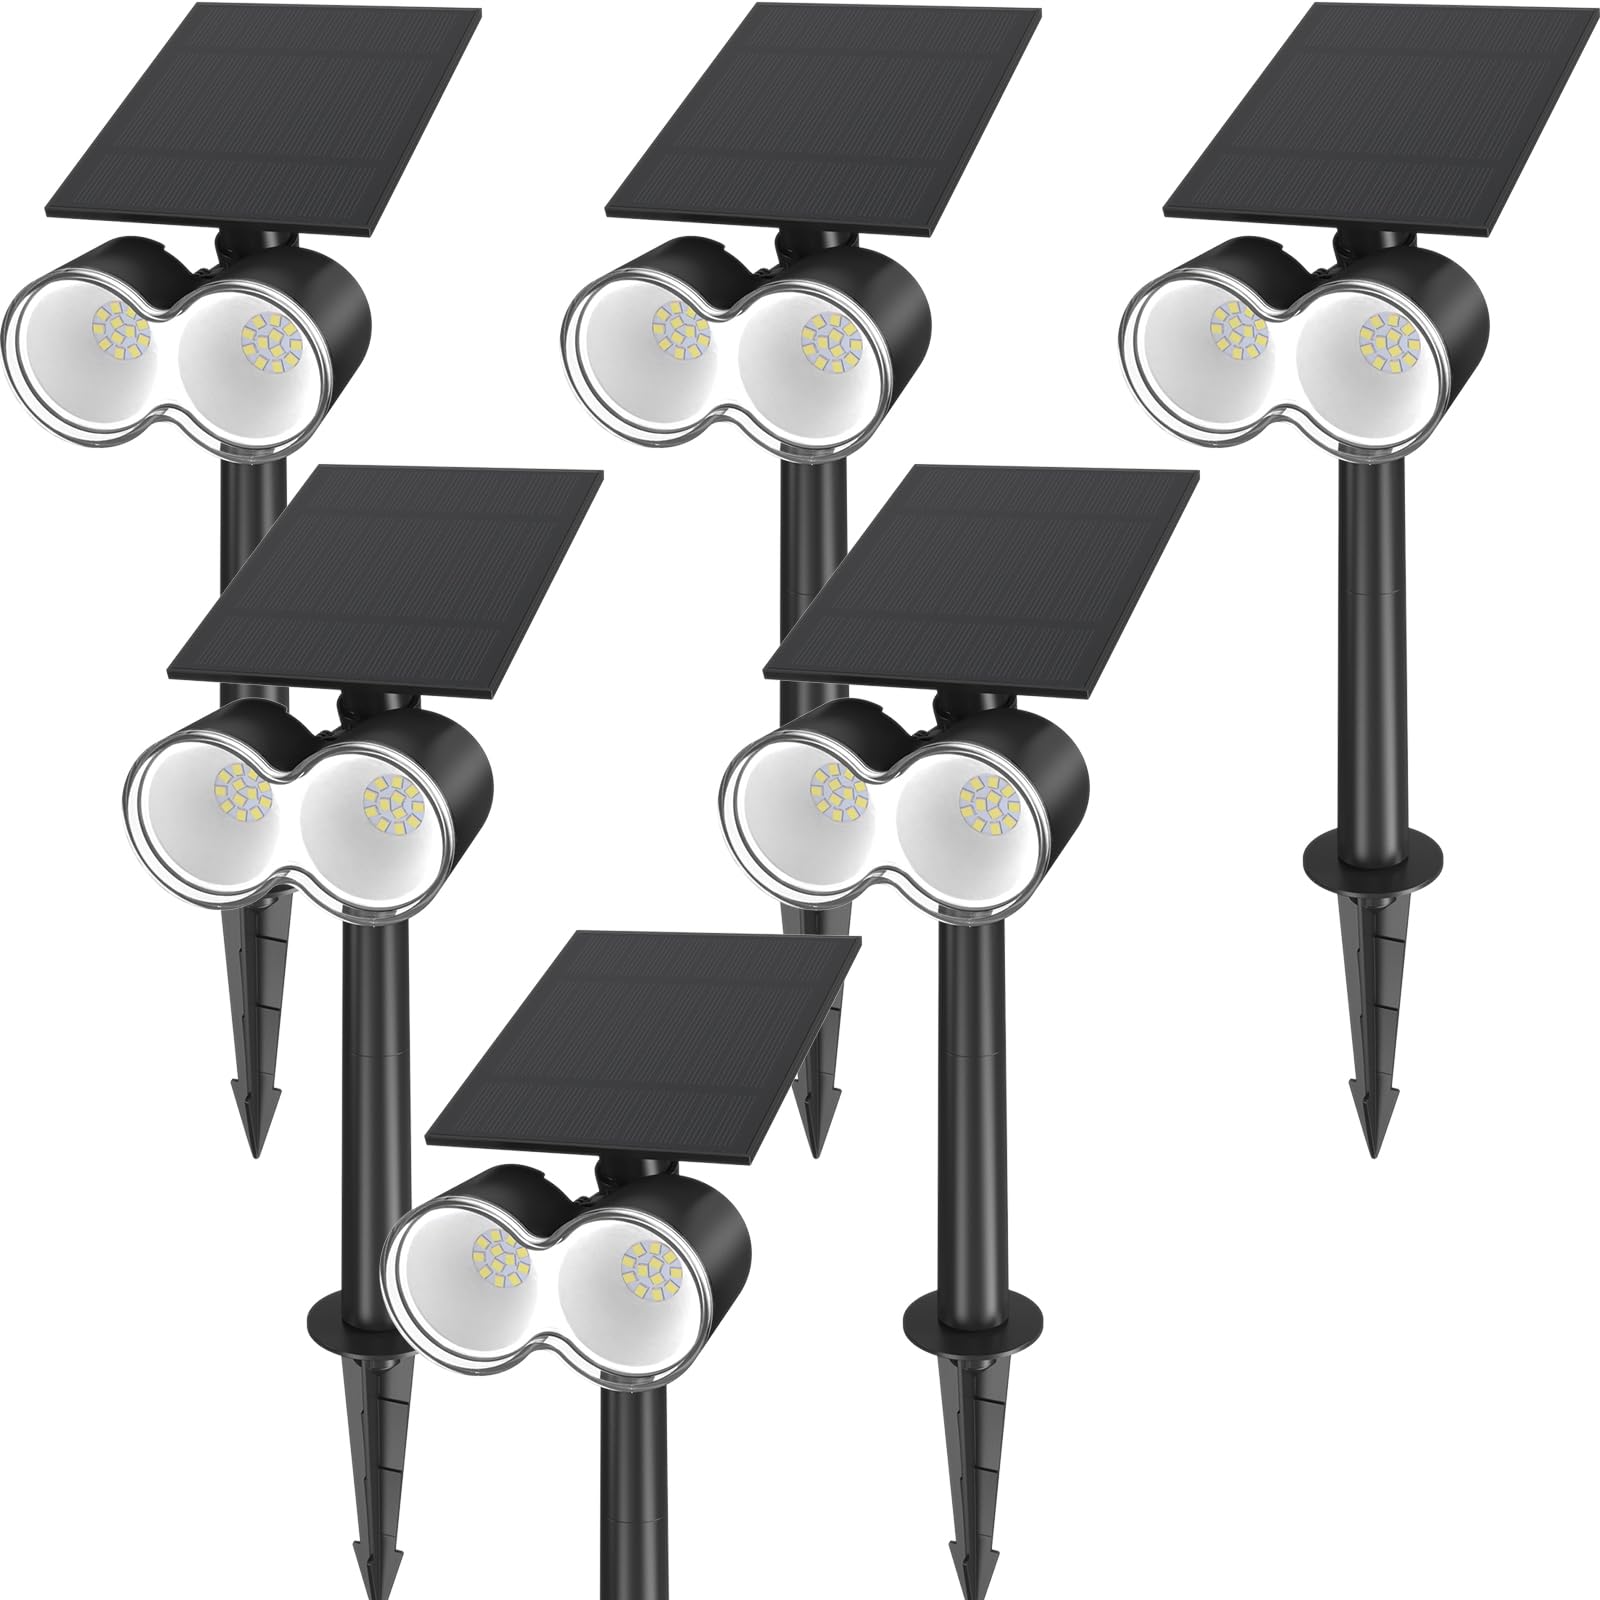 Solar Spotlights,6500K,360°Horizontal Adjustable,3 Modes,Auto ON/OFF,6 Packs,WX 6500K 6 - Barrina led